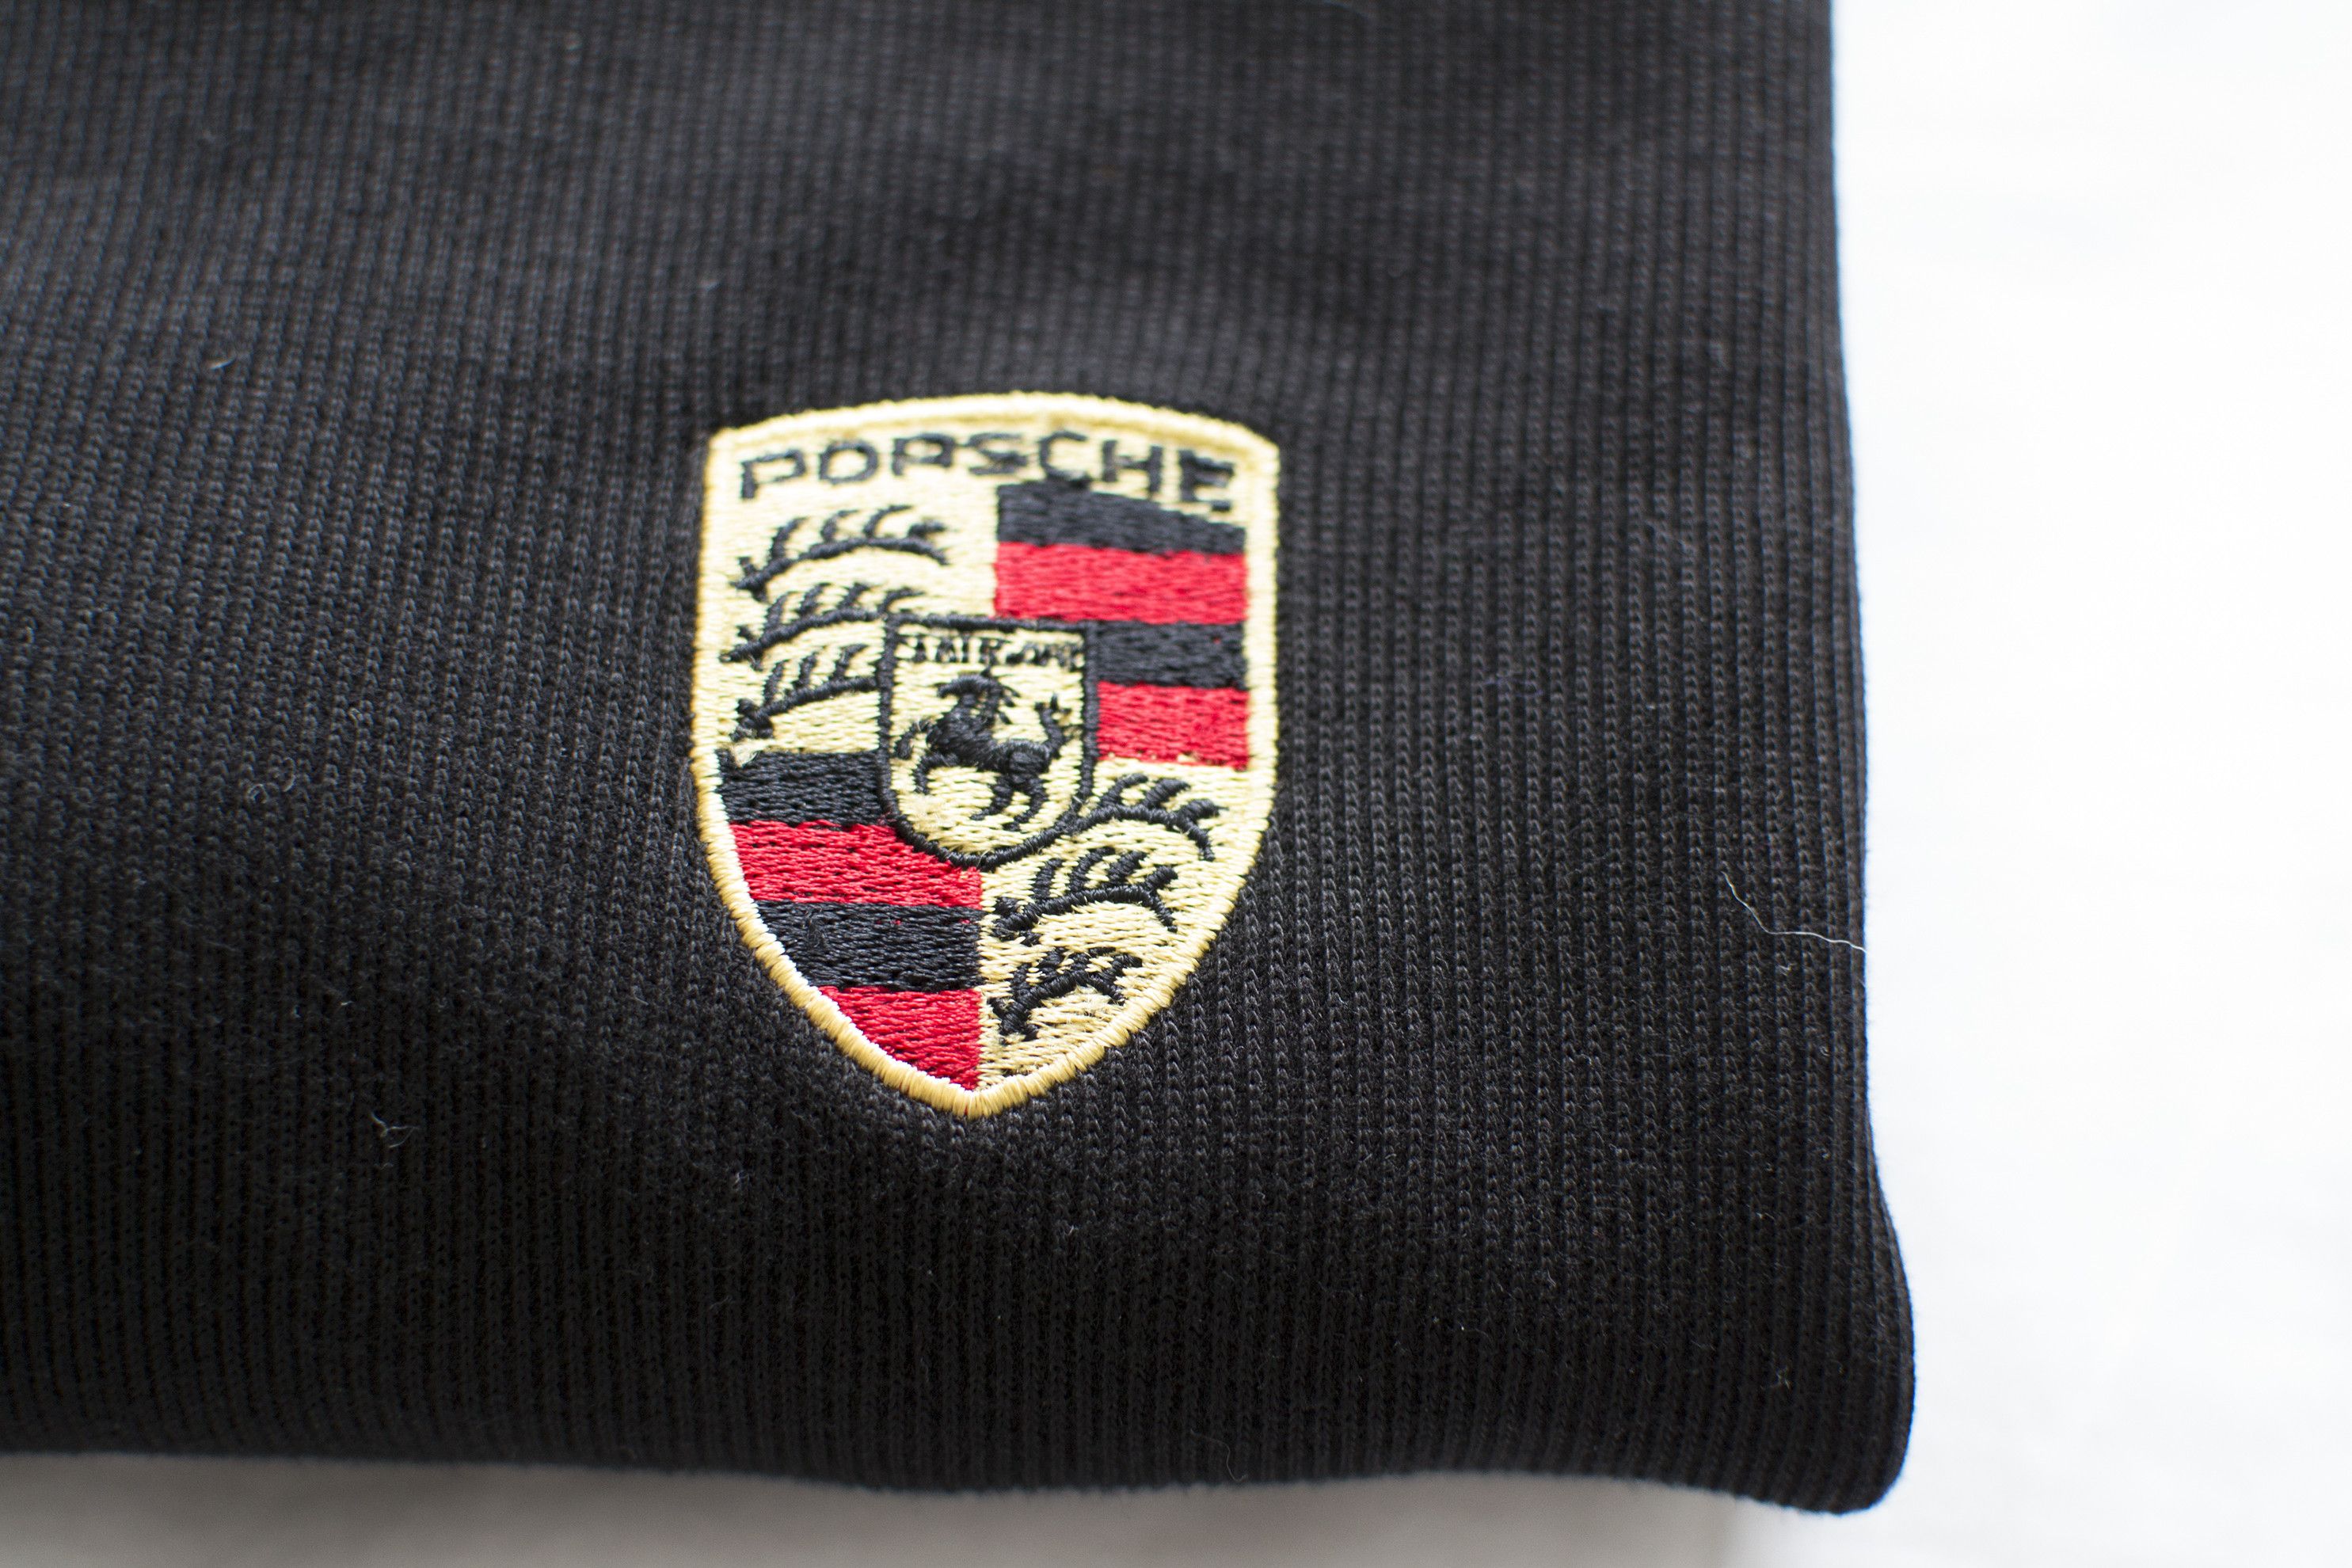 Porsche Design Vintage Porsche Light Sweater / Thermal Made in USA Size US XL / EU 56 / 4 - 2 Preview